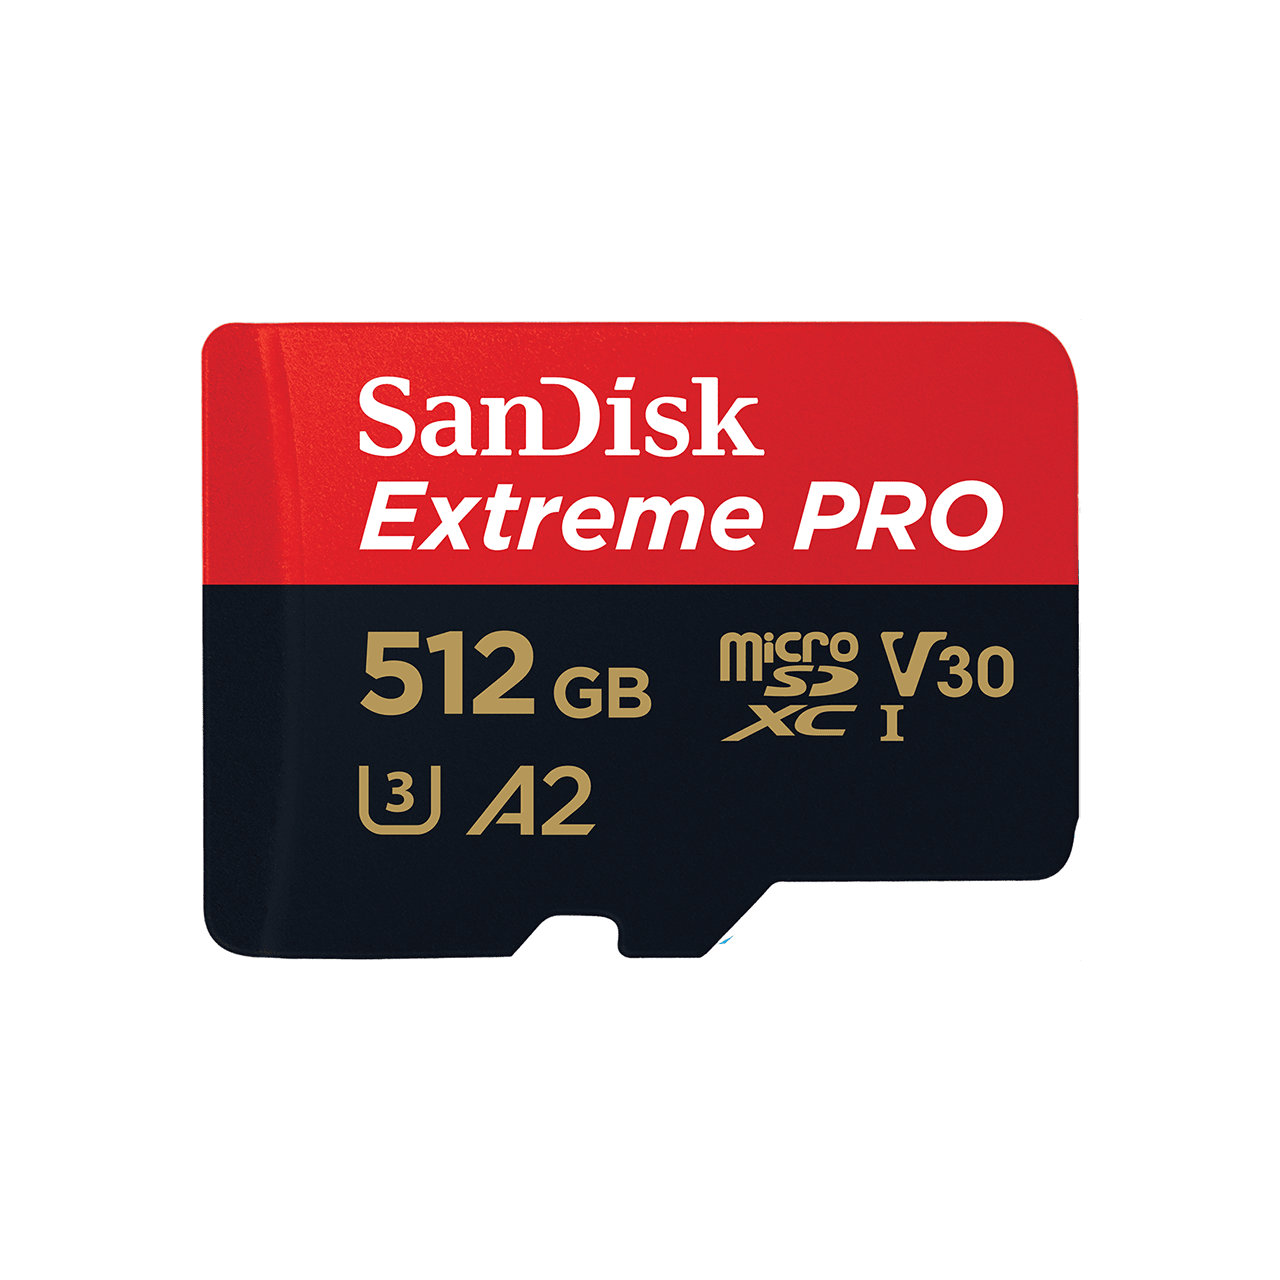 SanDisk Extreme PRO 512GB microSD card